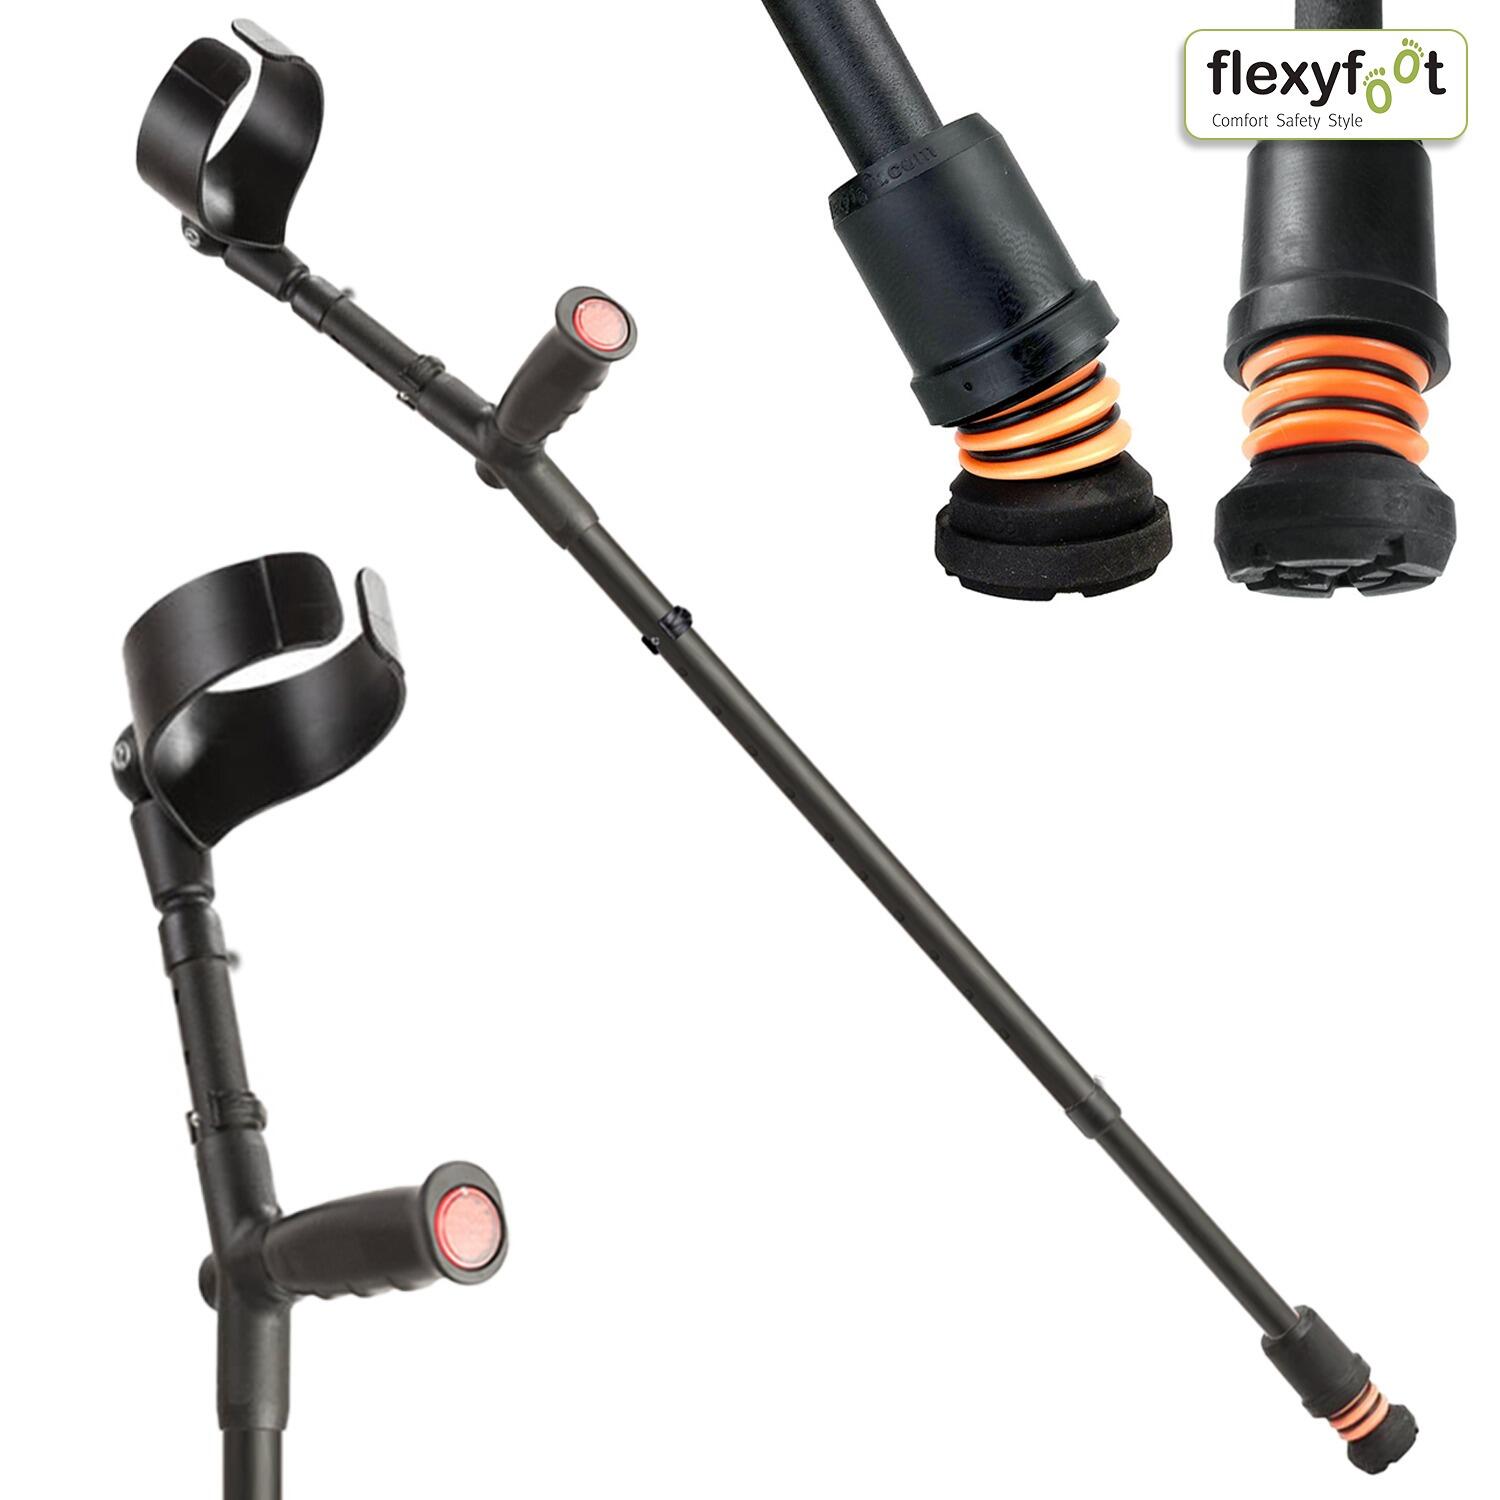 Flexyfoot Soft Grip Double Adjustable Crutches - textured Black